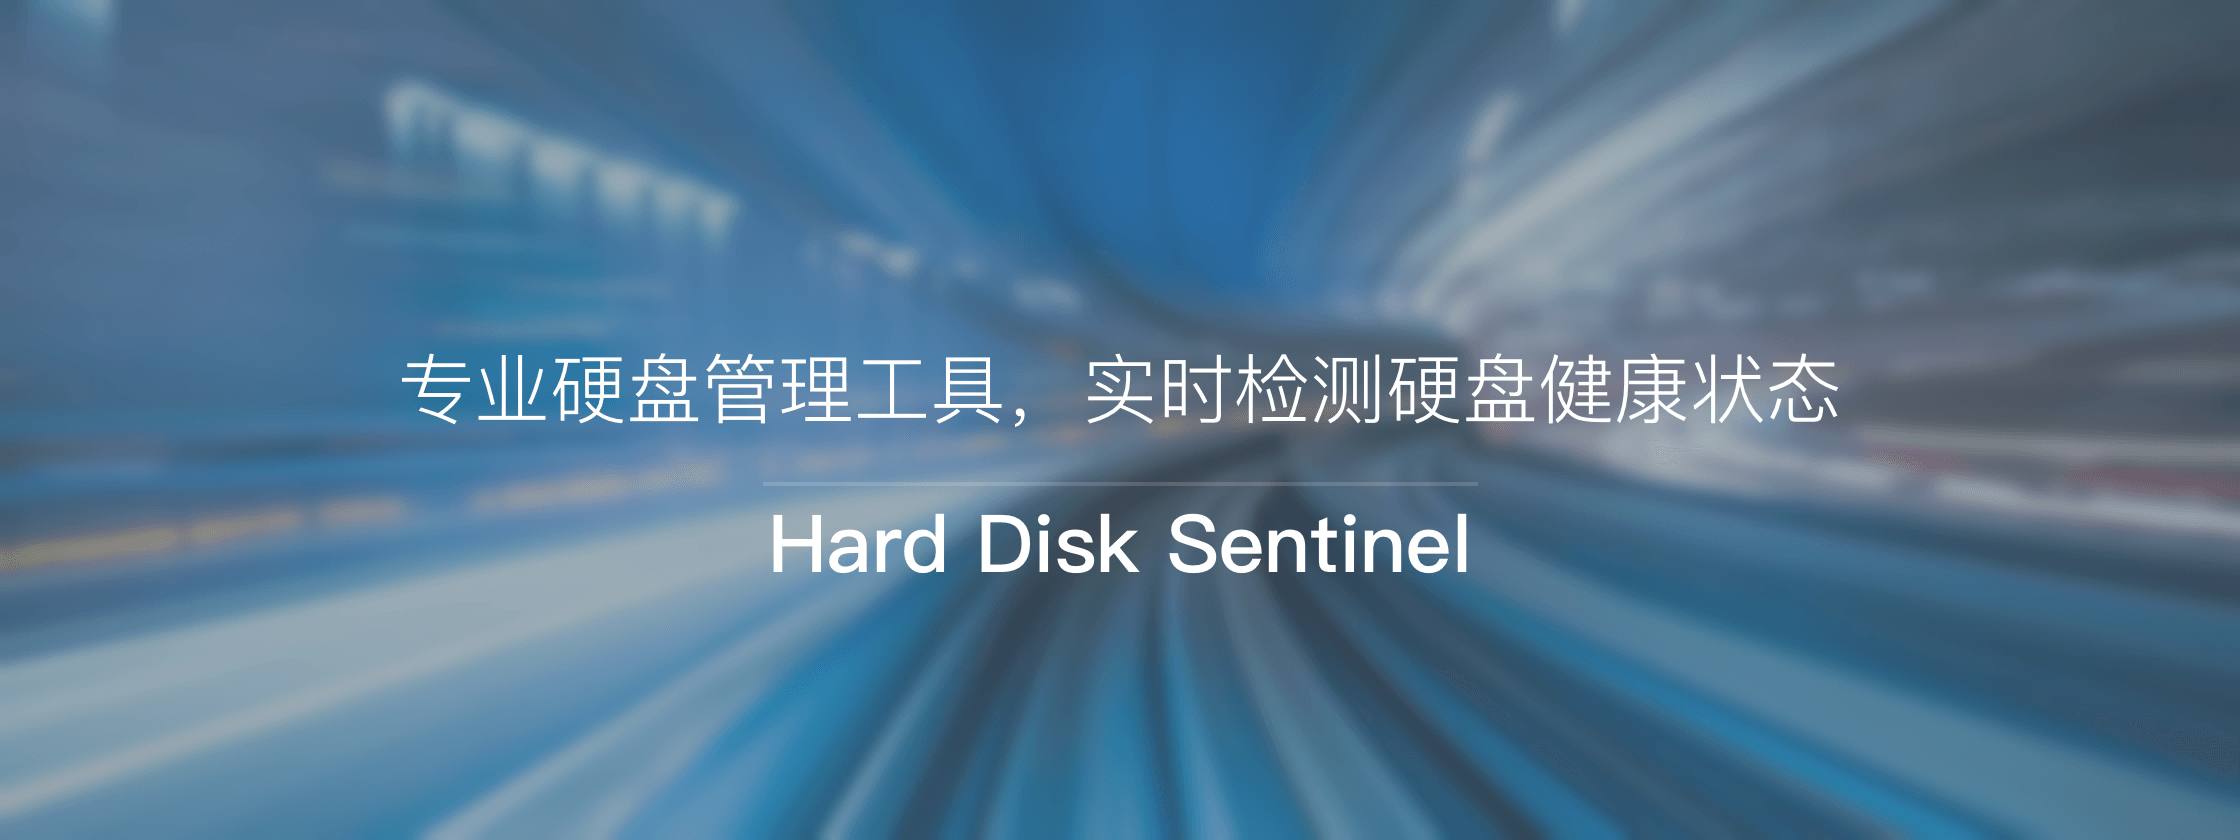 Hard Disk Sentinel – 专业硬盘管理工具，实时检测硬盘健康状态